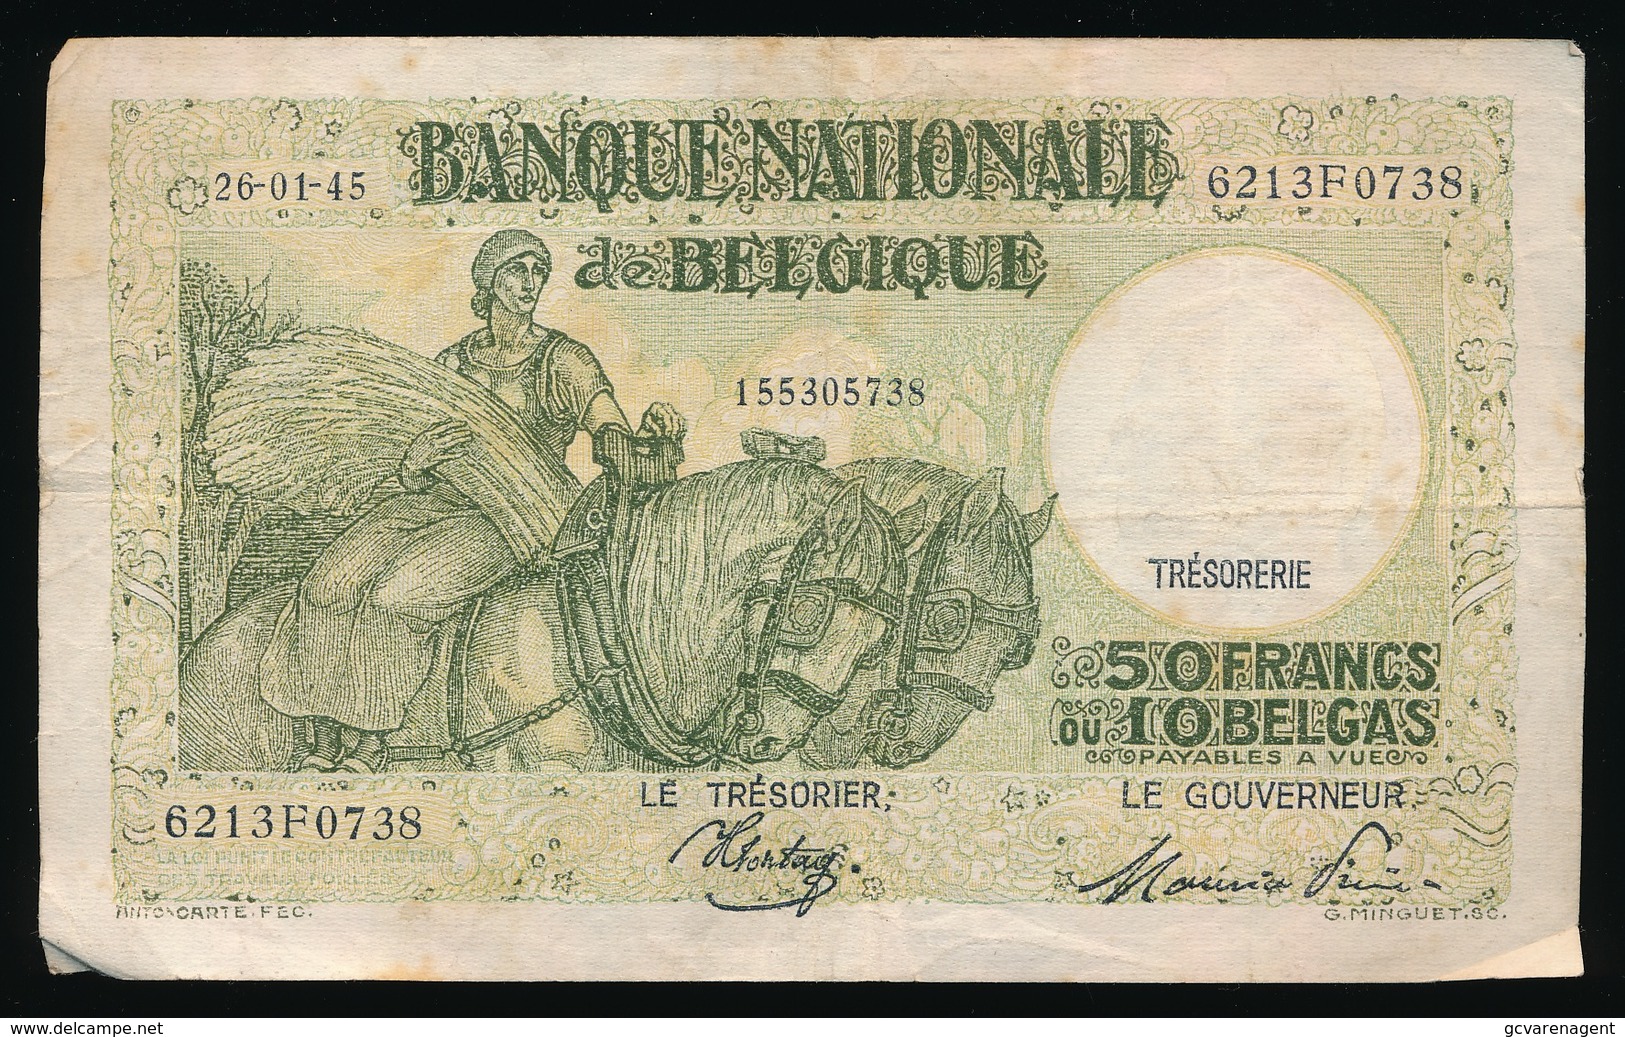 50 FRANK OF 10 BELGA   2 SCANS - 50 Francs-10 Belgas